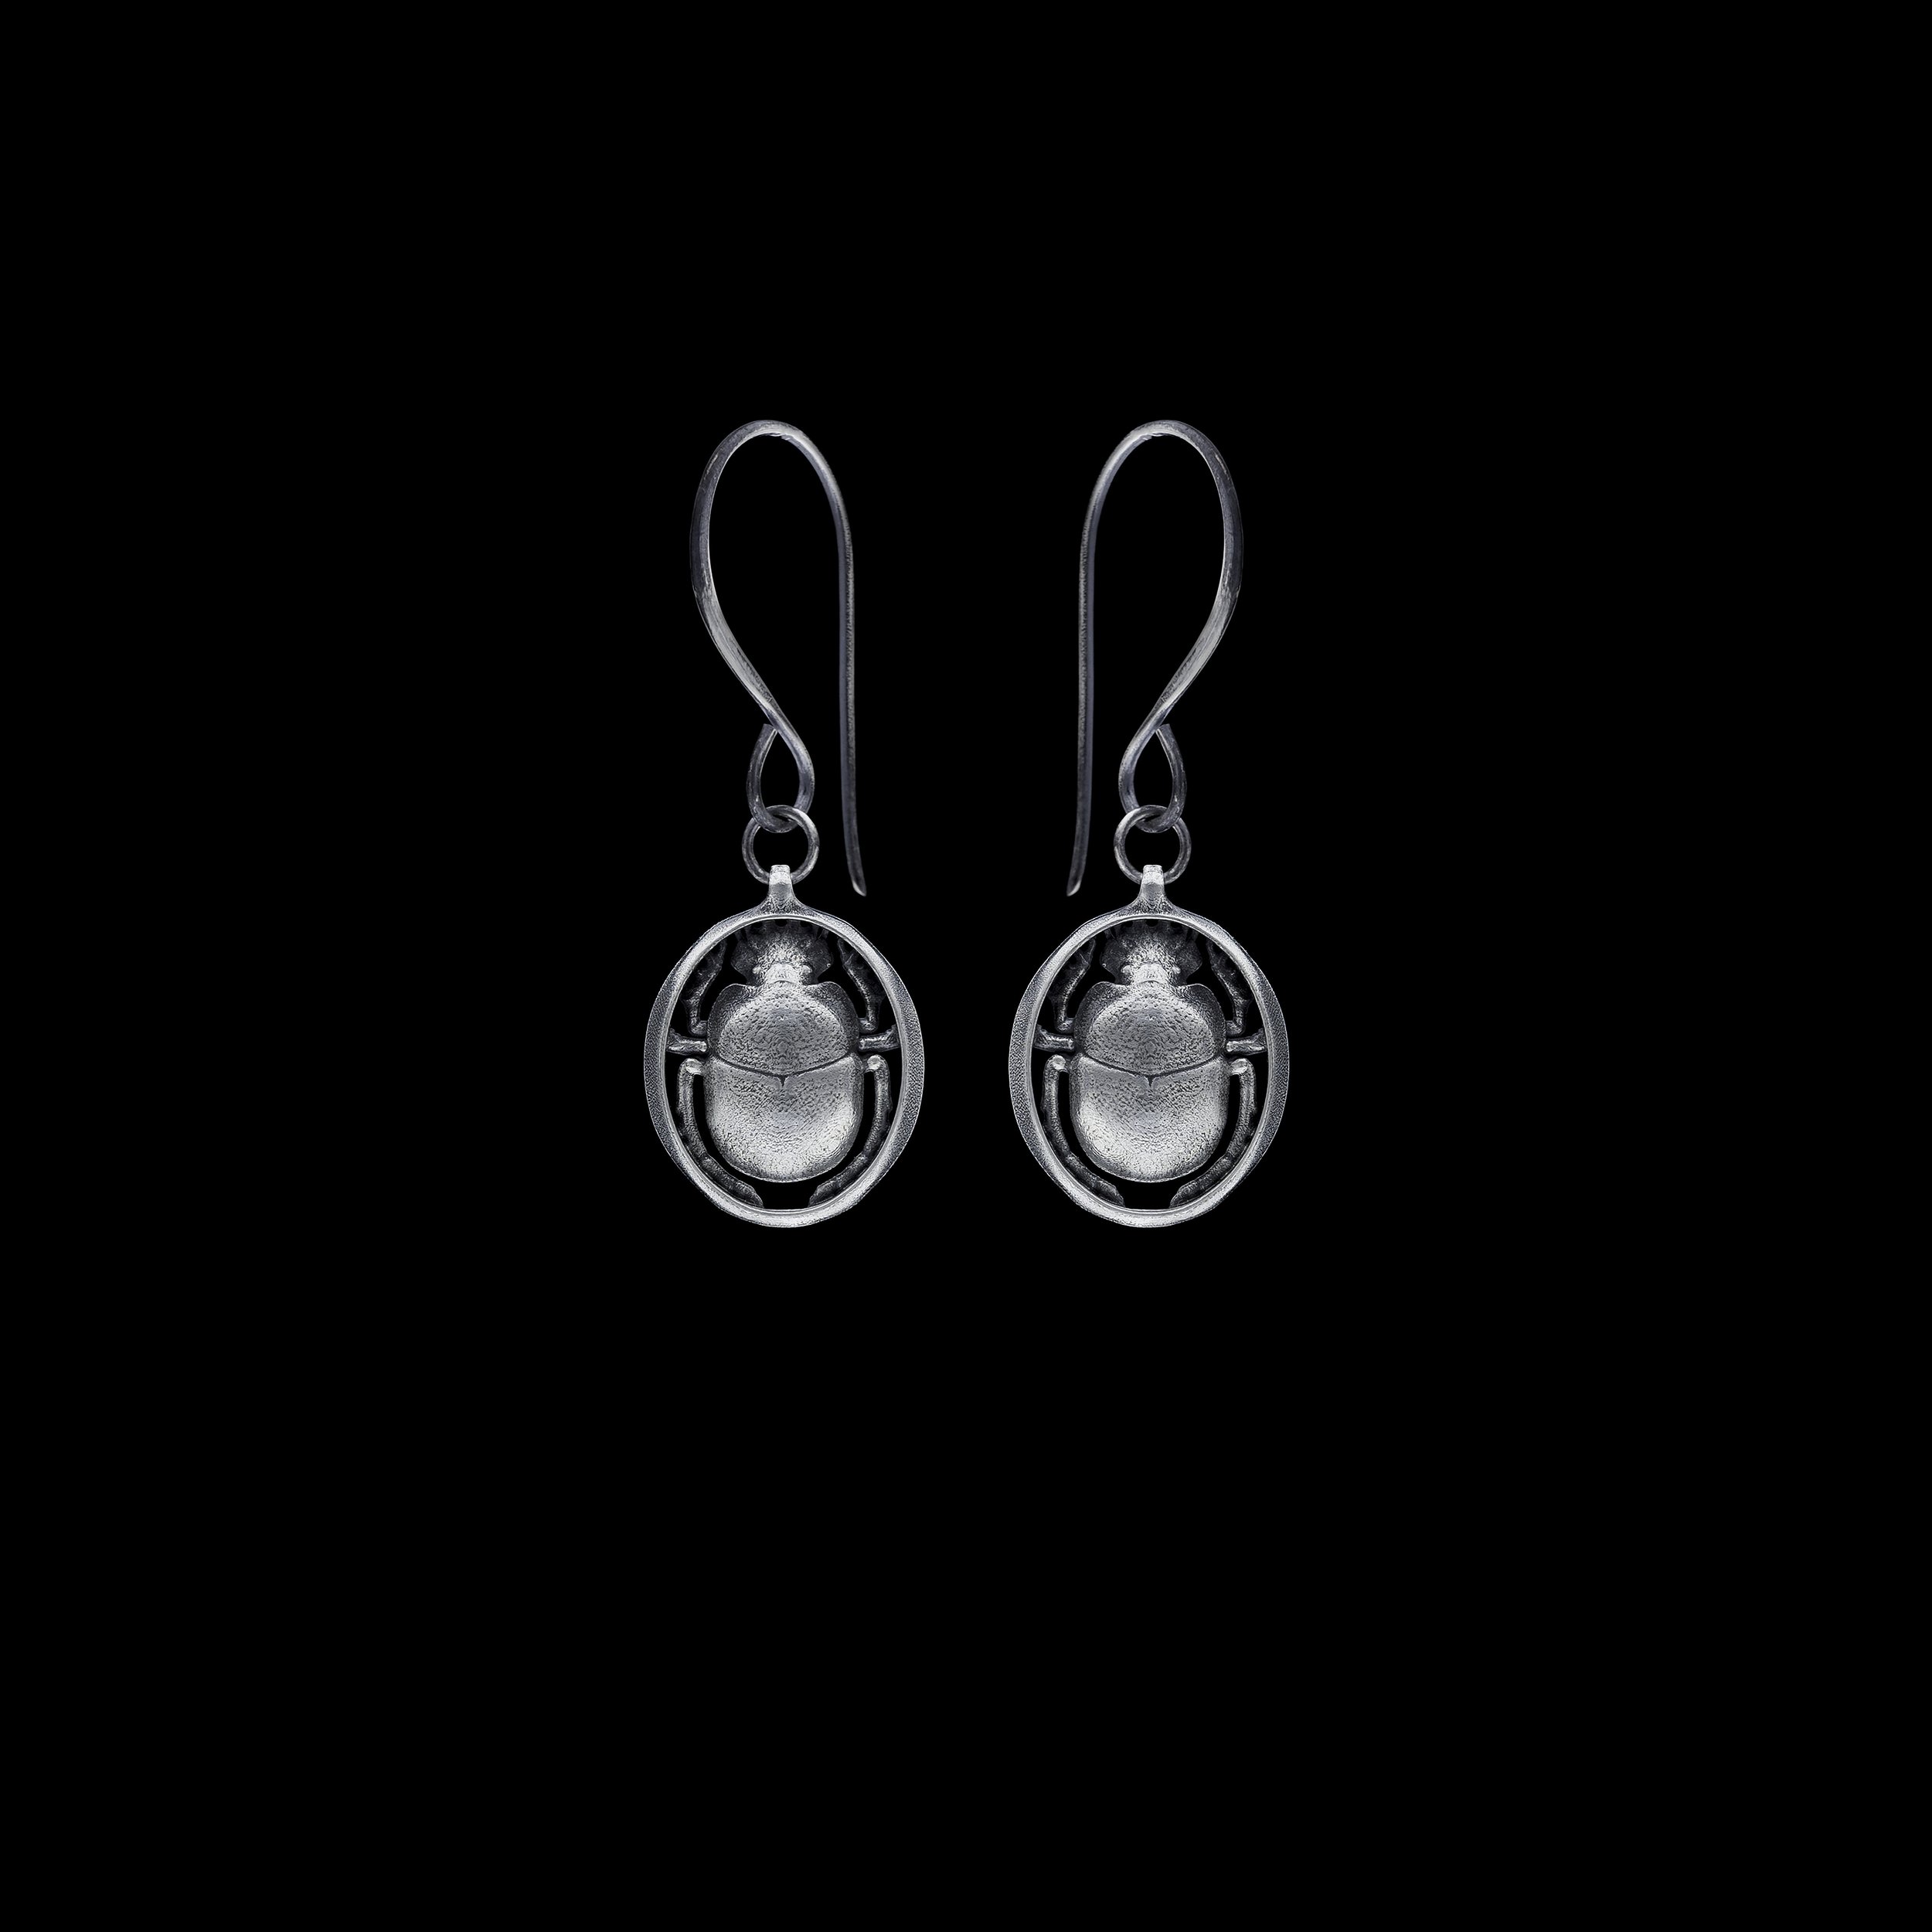 Buy Mystic Arc Earrings Online Cheap, Water drop hoop earrings, Glitteratti  Glam, trendy earrings, Online Shopping, Kundan set, Ishhaara Meenakari  Collections for Women & Girls Online. Water drop stud earrings, trendy ear